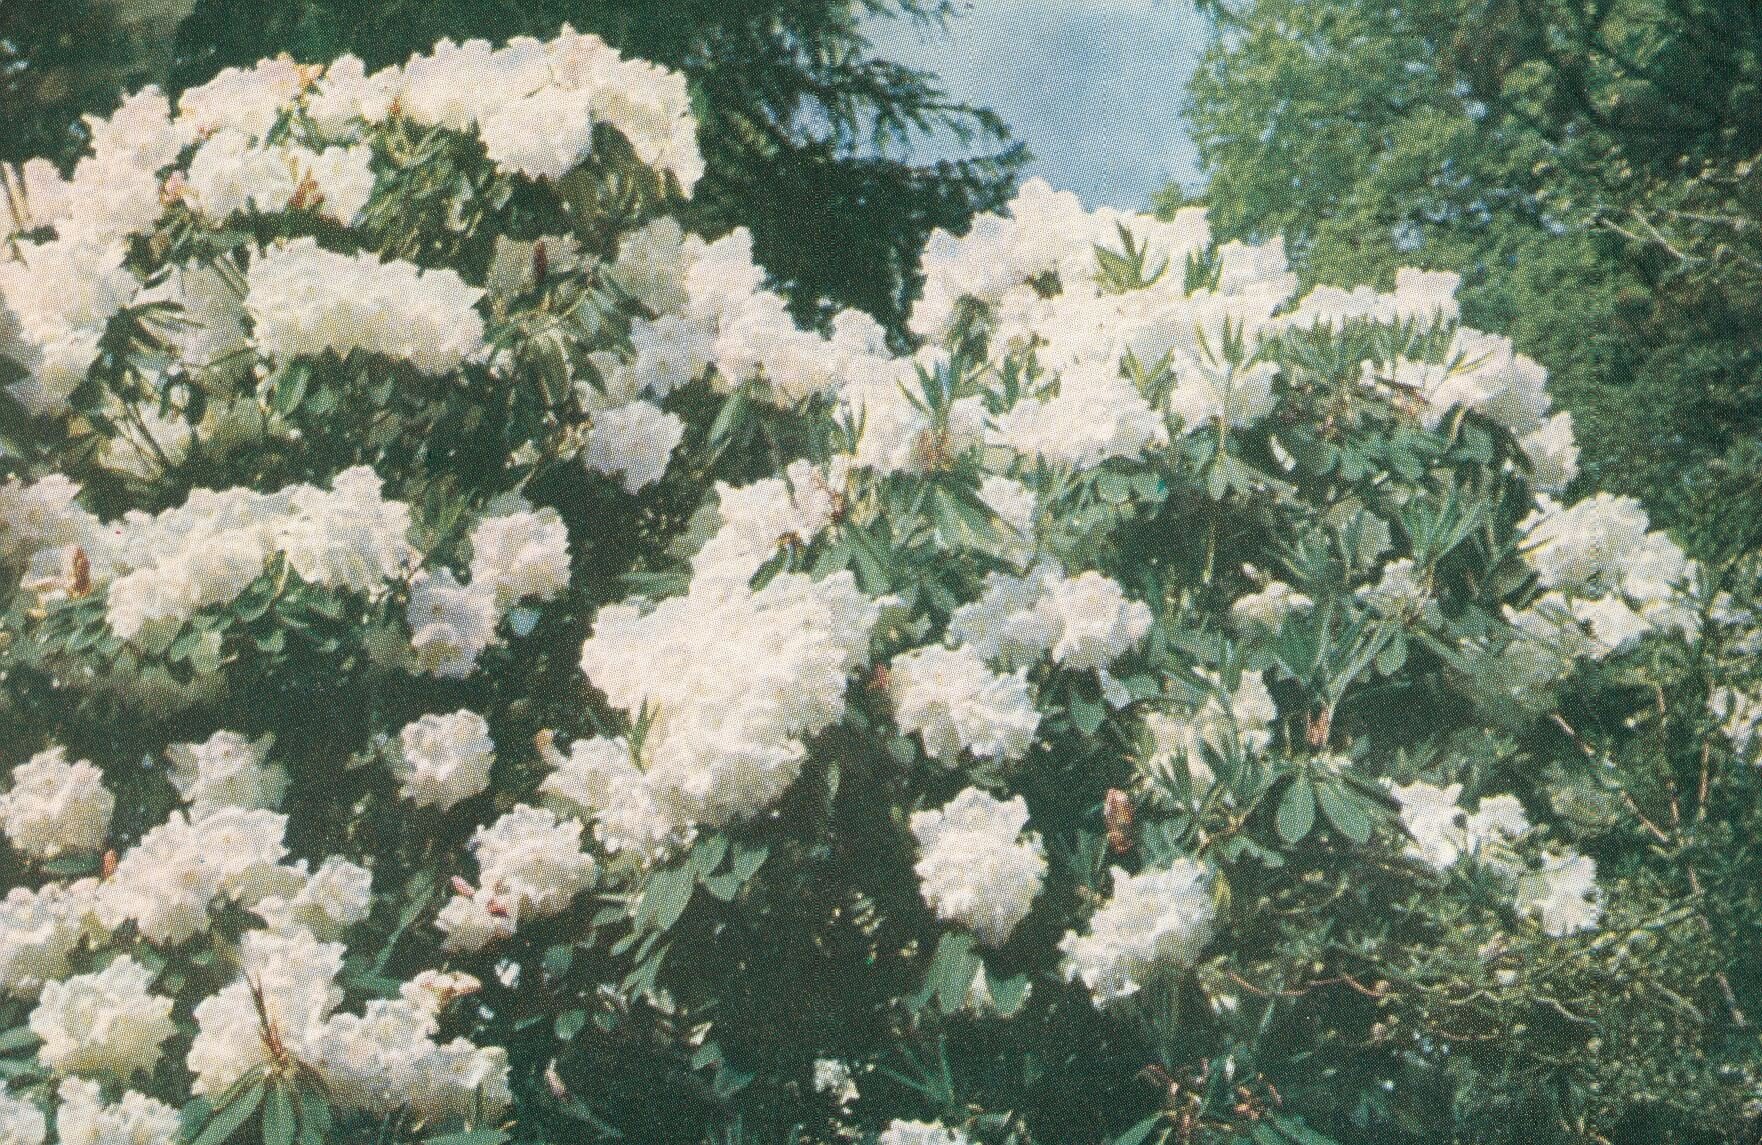 LL Rhododendron loderi var White Diamond.jpg